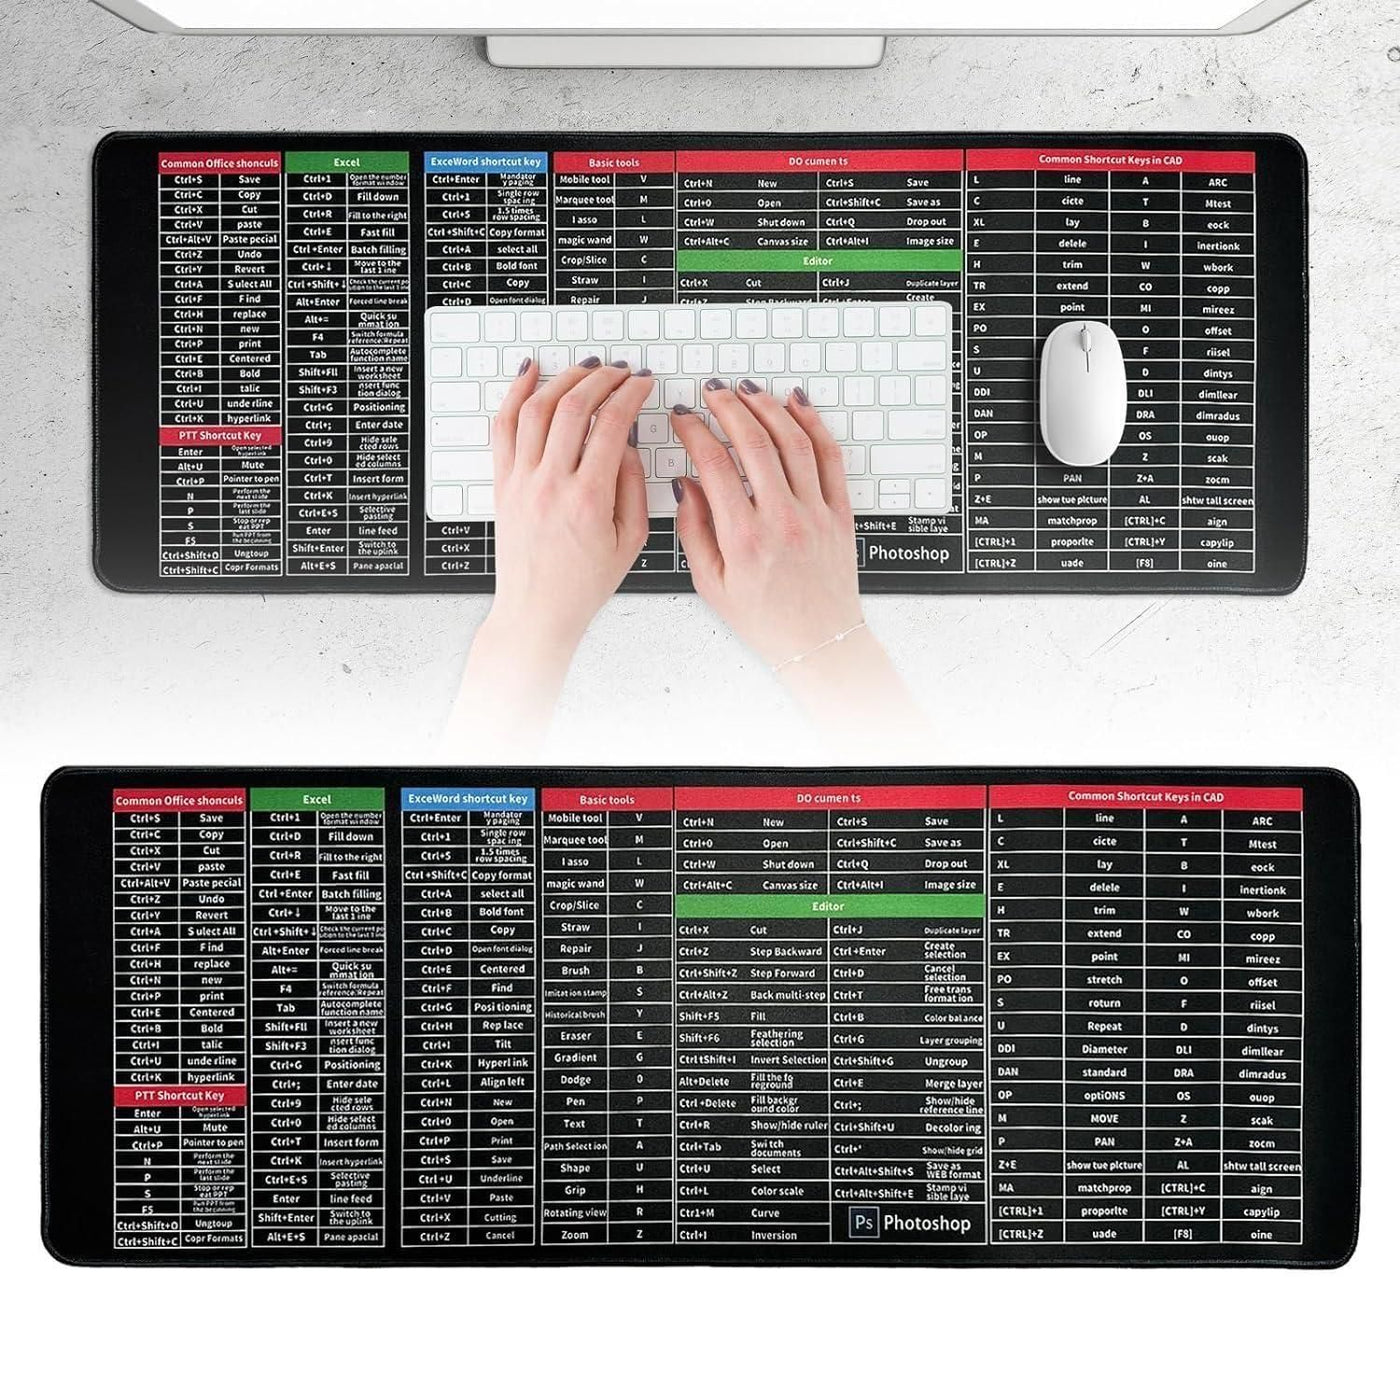 Anti-slip Keyboard Pad with (Shortcut Key Patterns)